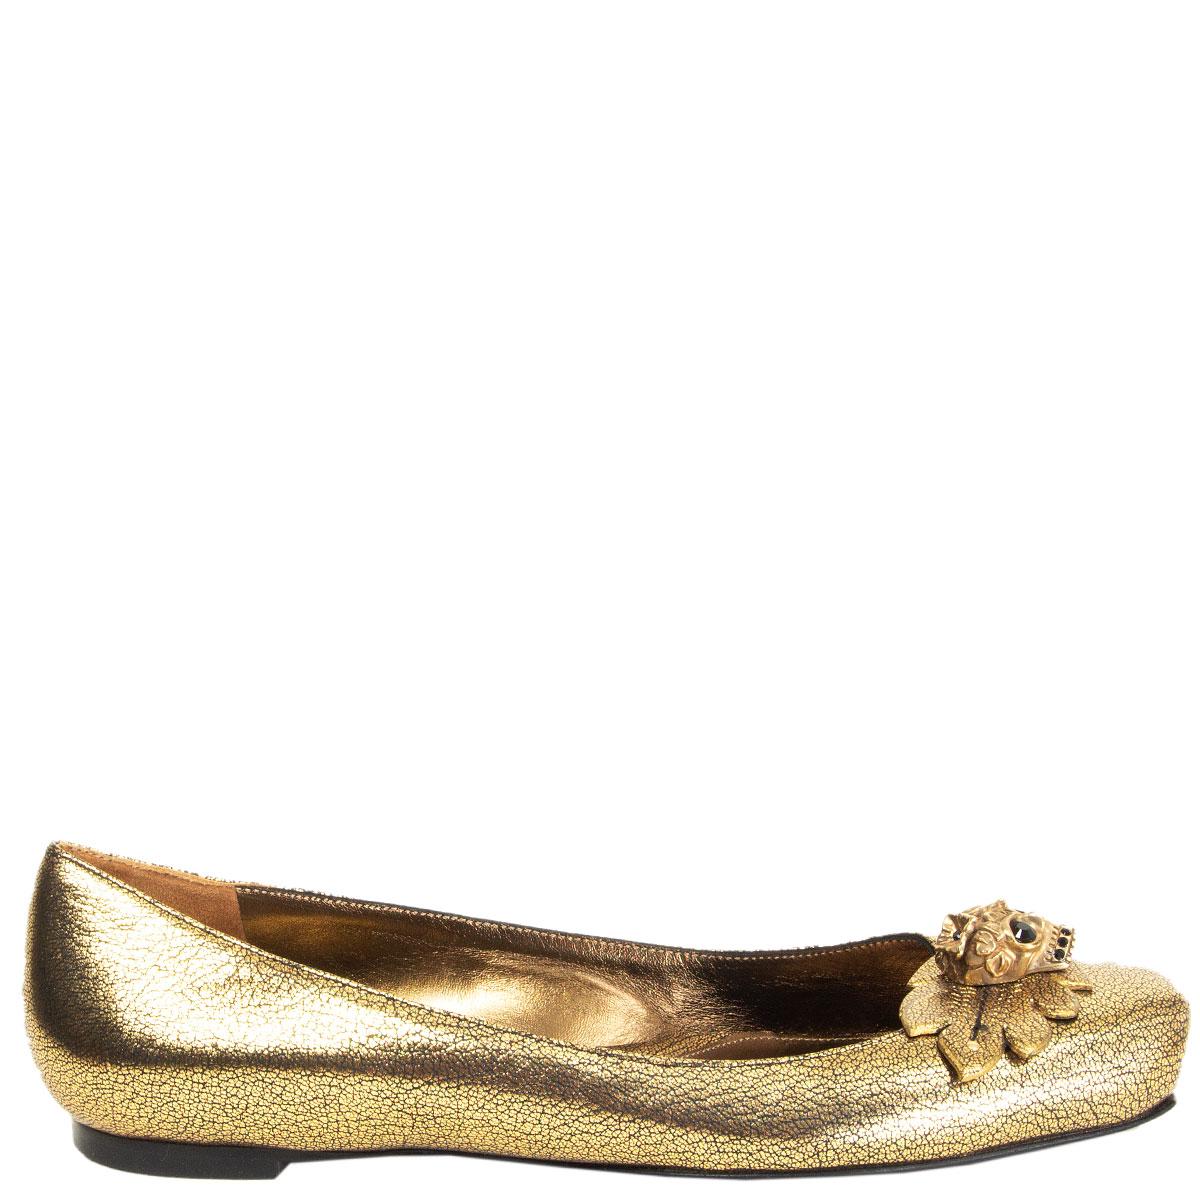 ALEXANDER MCQUEEN metallic gold SKULL & LEAF Ballet Flats Shoes 39.5 For Sale